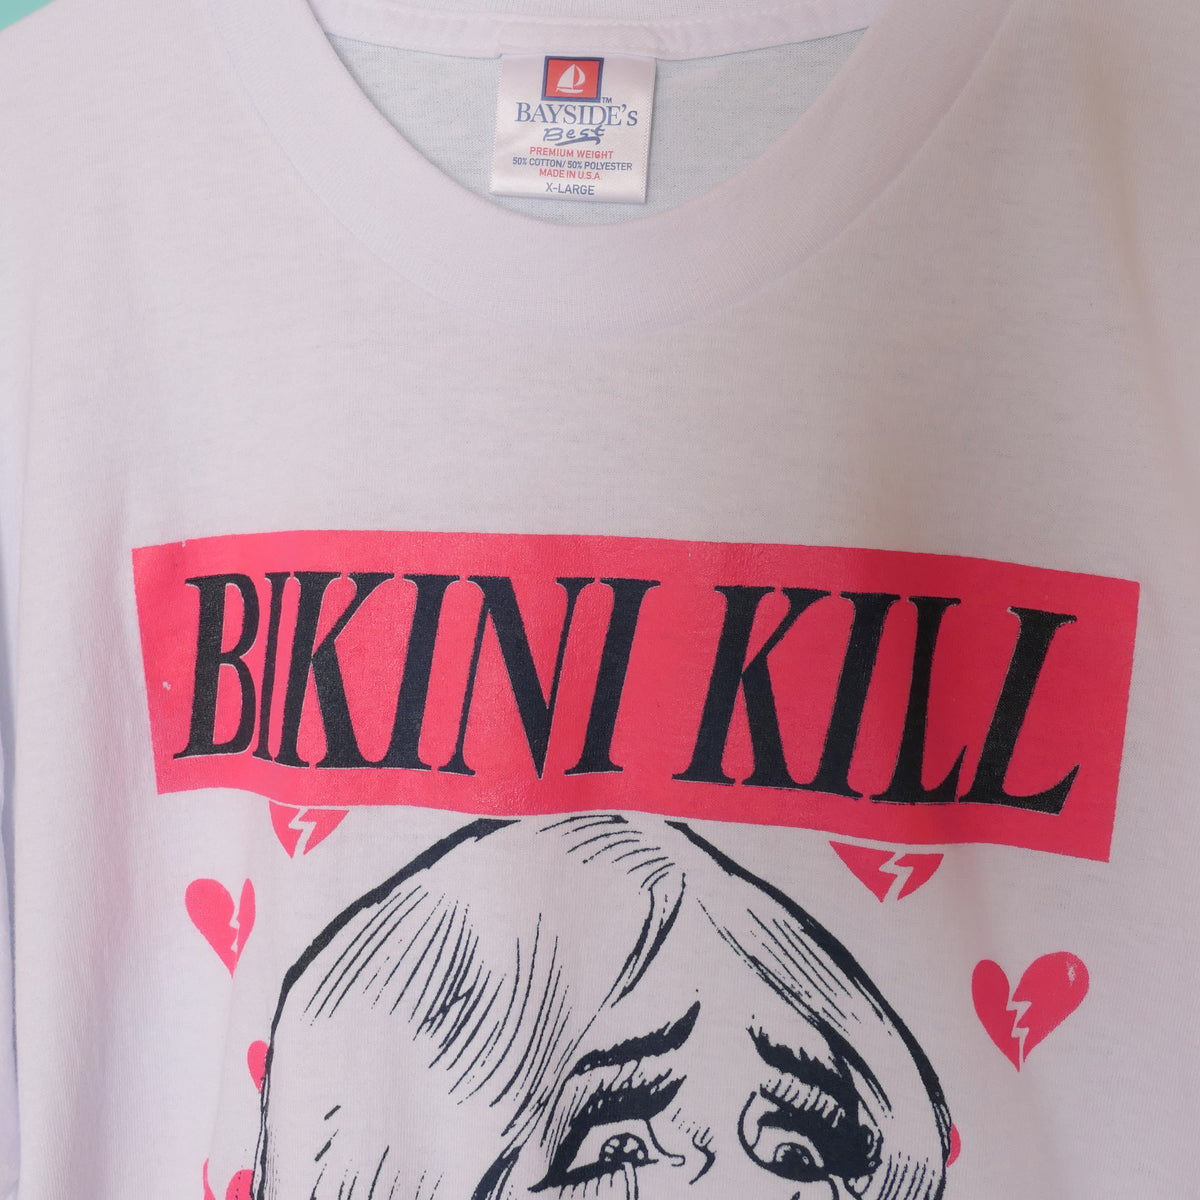 Bikini Kill Heartbreak Tee